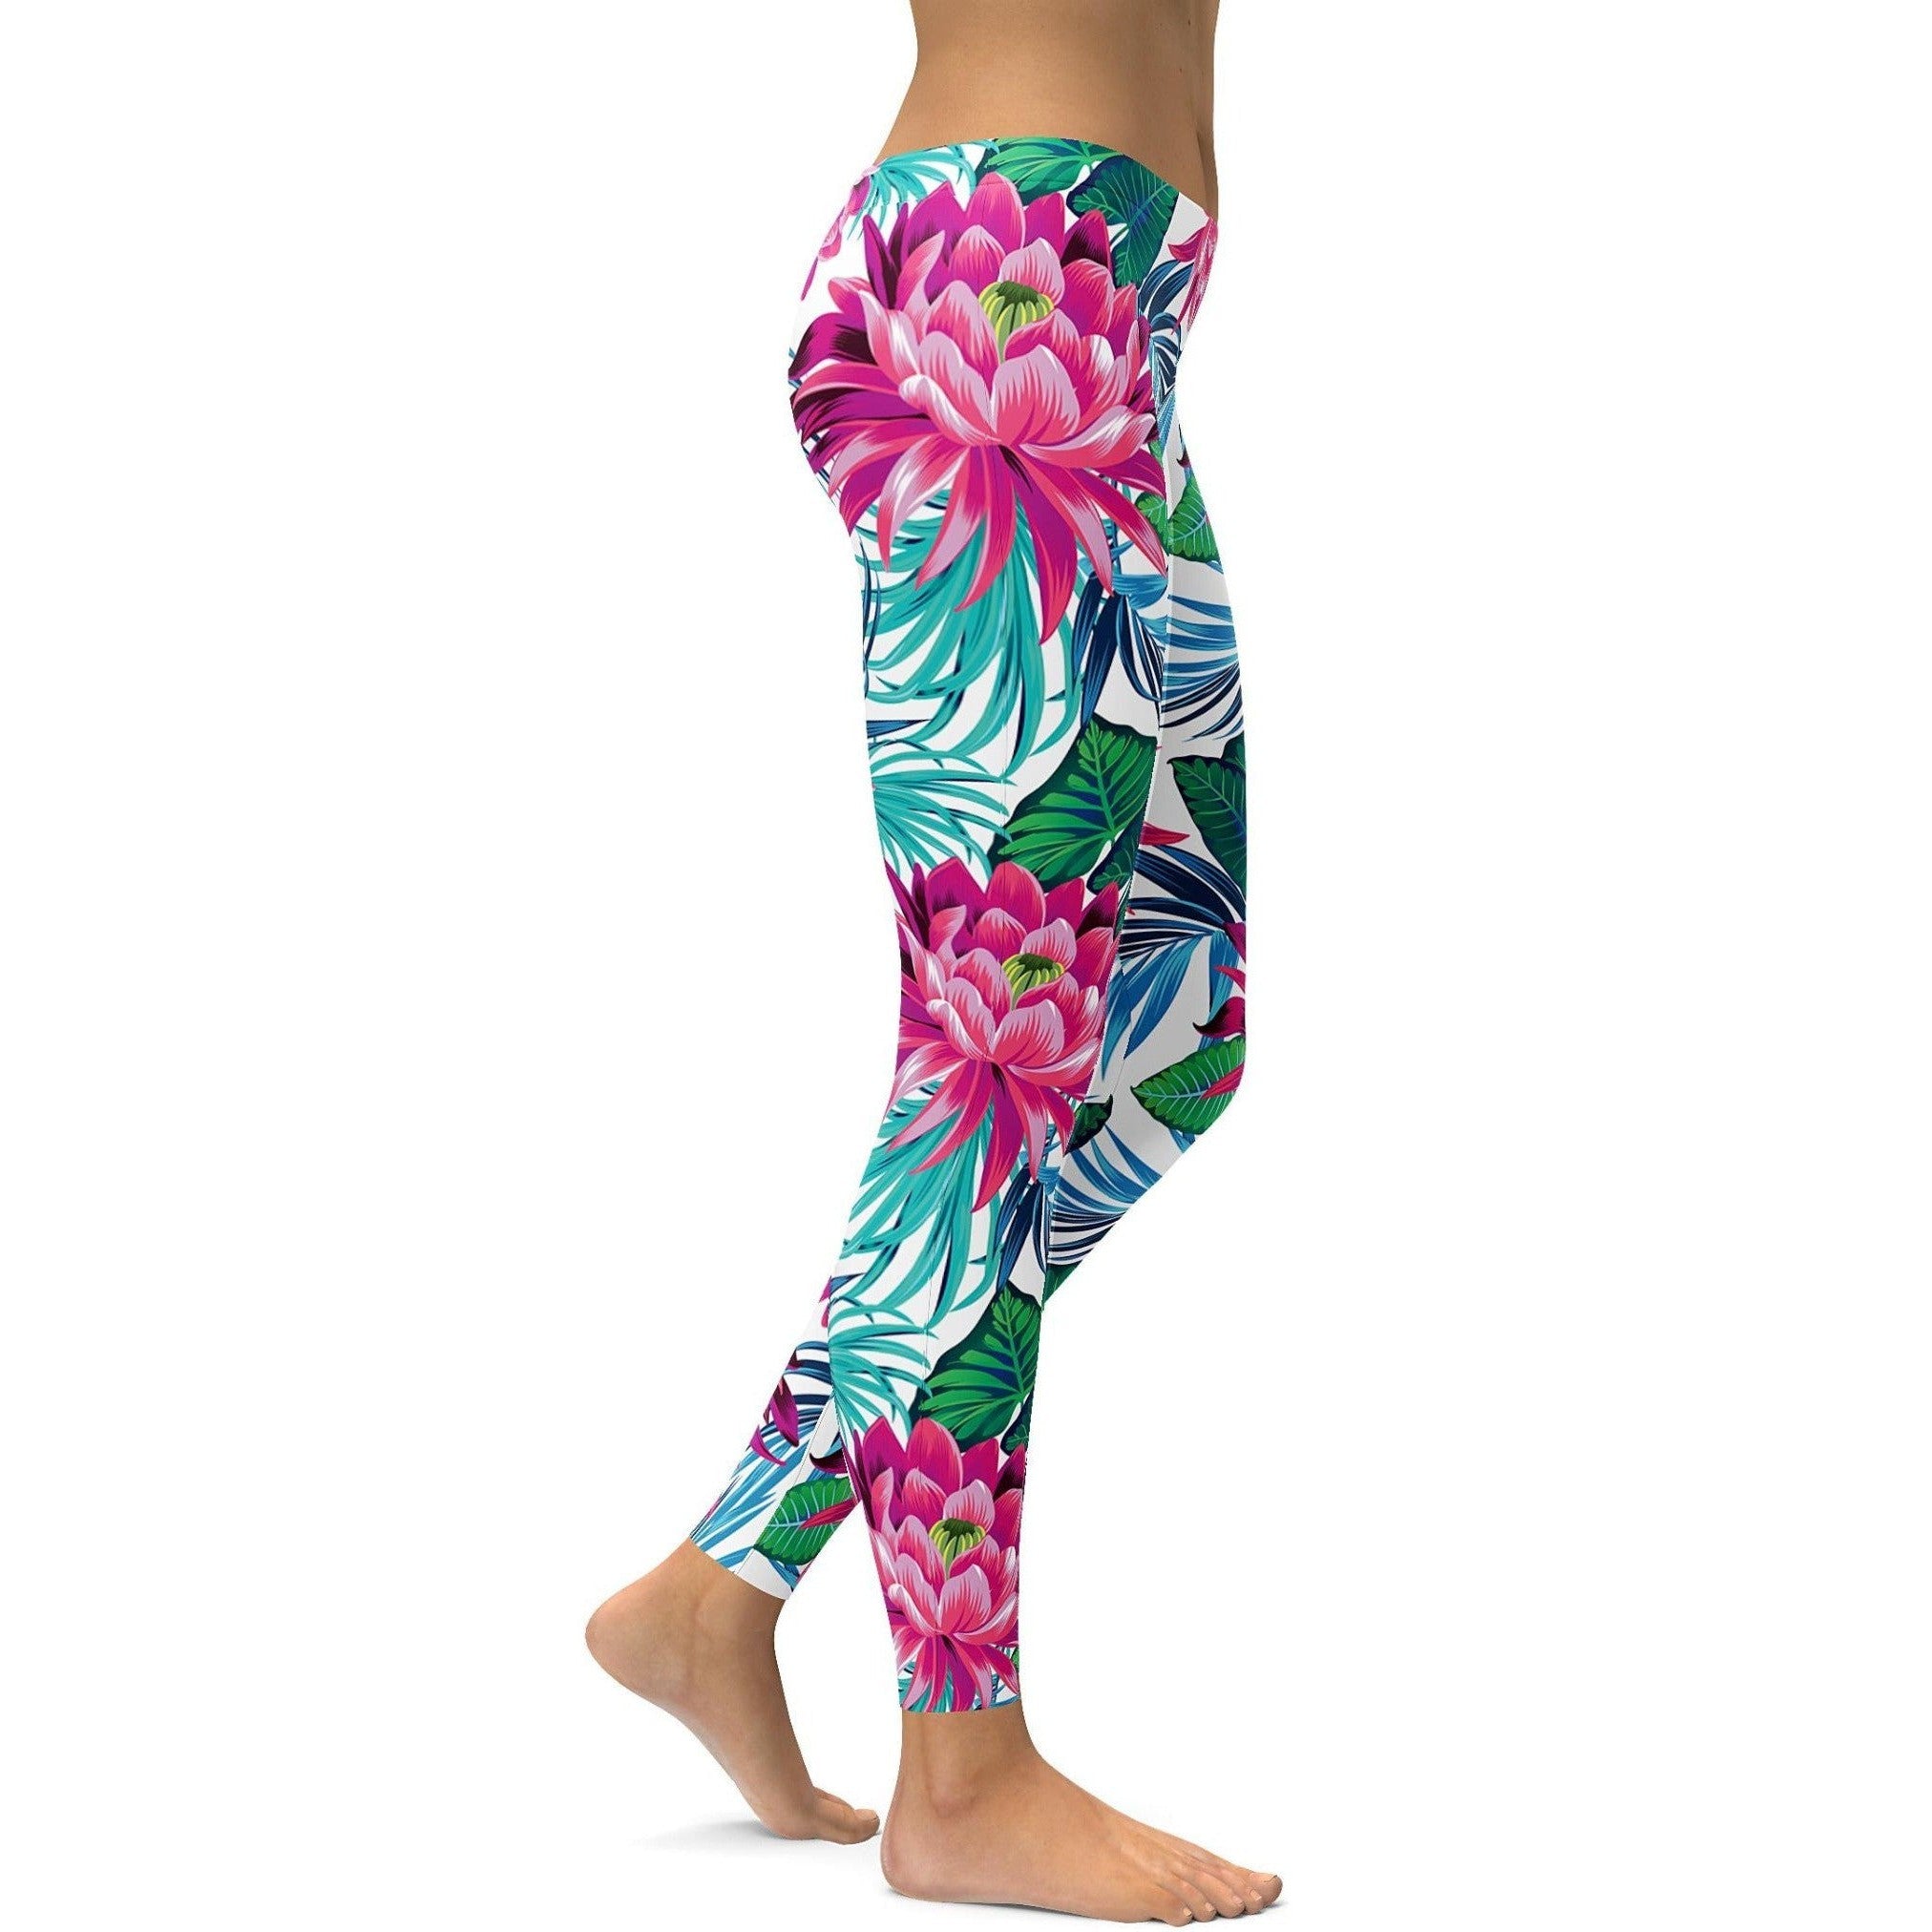 Women's REG/Plus Super Soft Cotton Blend Basic Workout Printed Pattern  Leggings